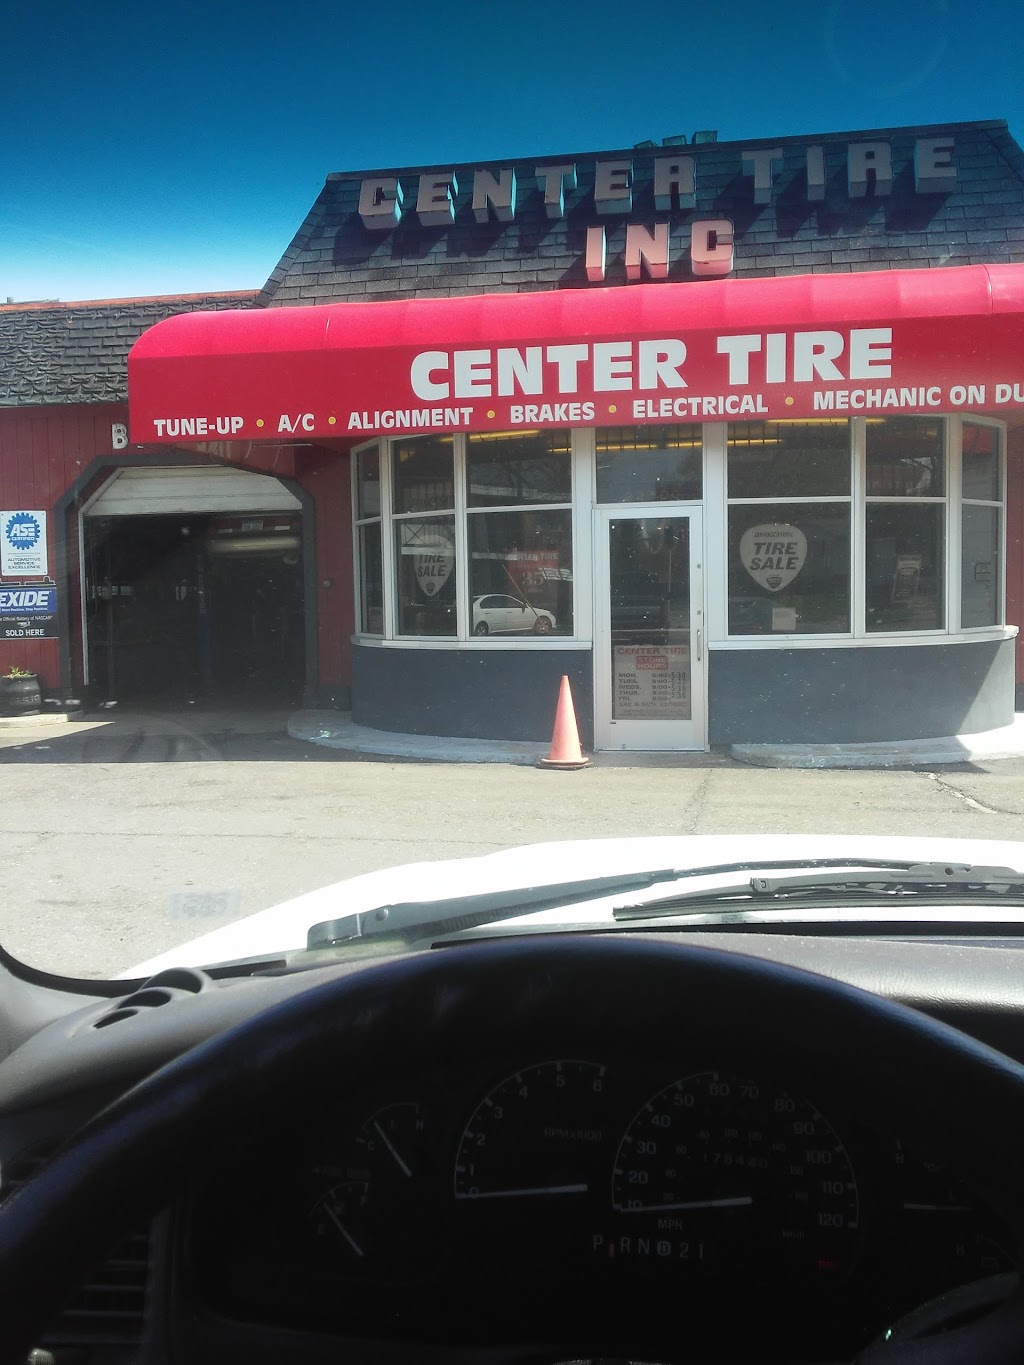 Center Tire Inc of Redford | 22300 W McNichols Rd, Detroit, MI 48219 | Phone: (313) 531-7670